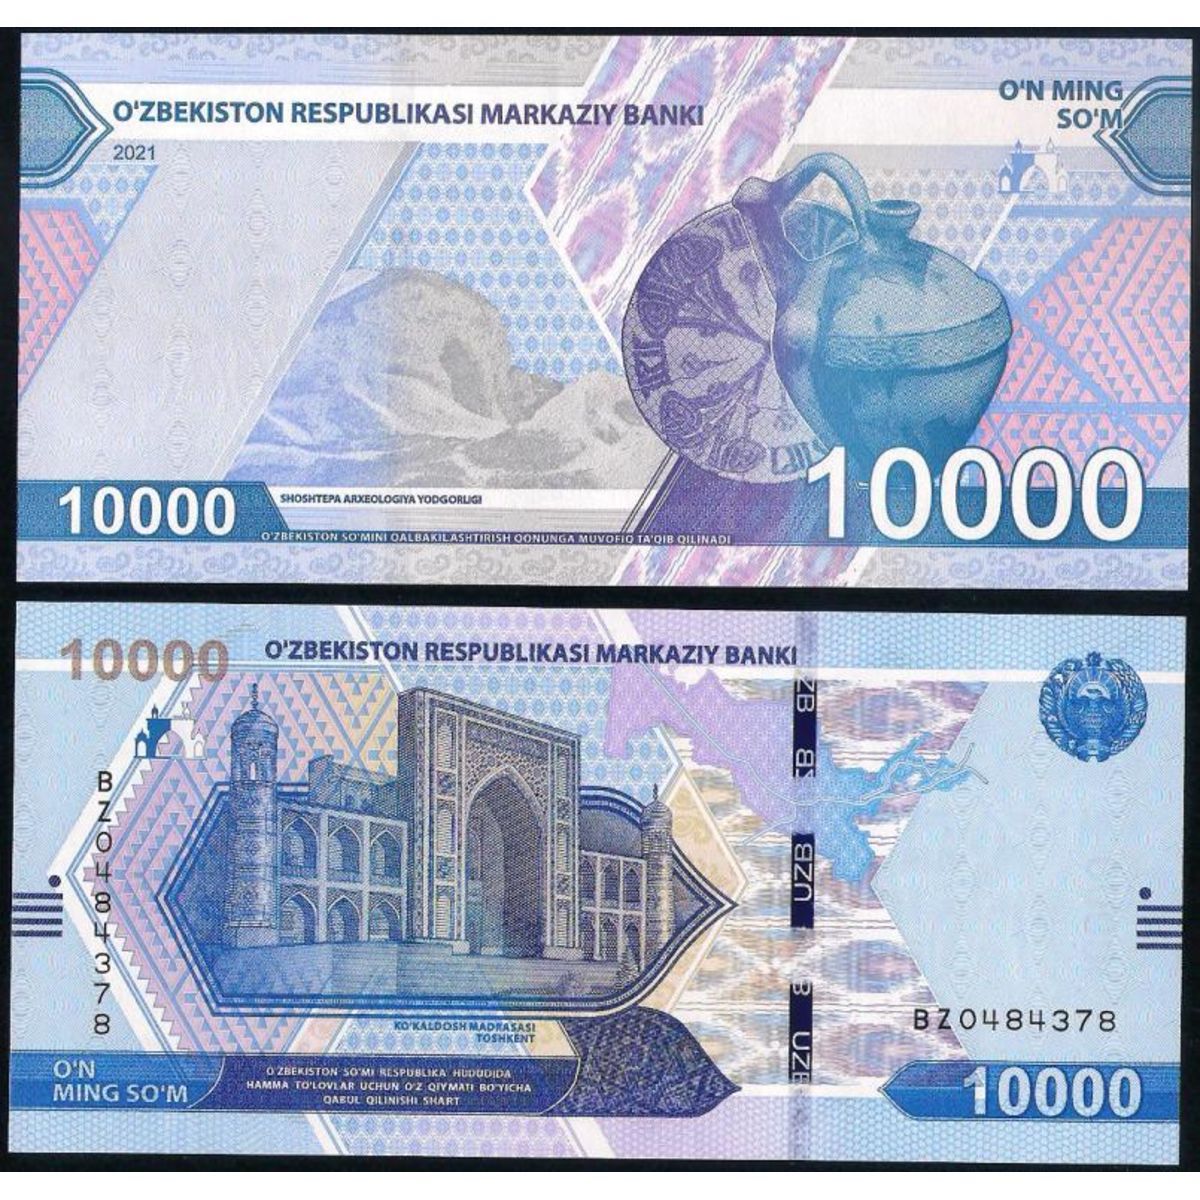 Минг сум в рублях. Узбекистан 5000 сум 2021 года. Банкноты Узбекистана. Купюра Узбекистана 10000. Банкнота сум.